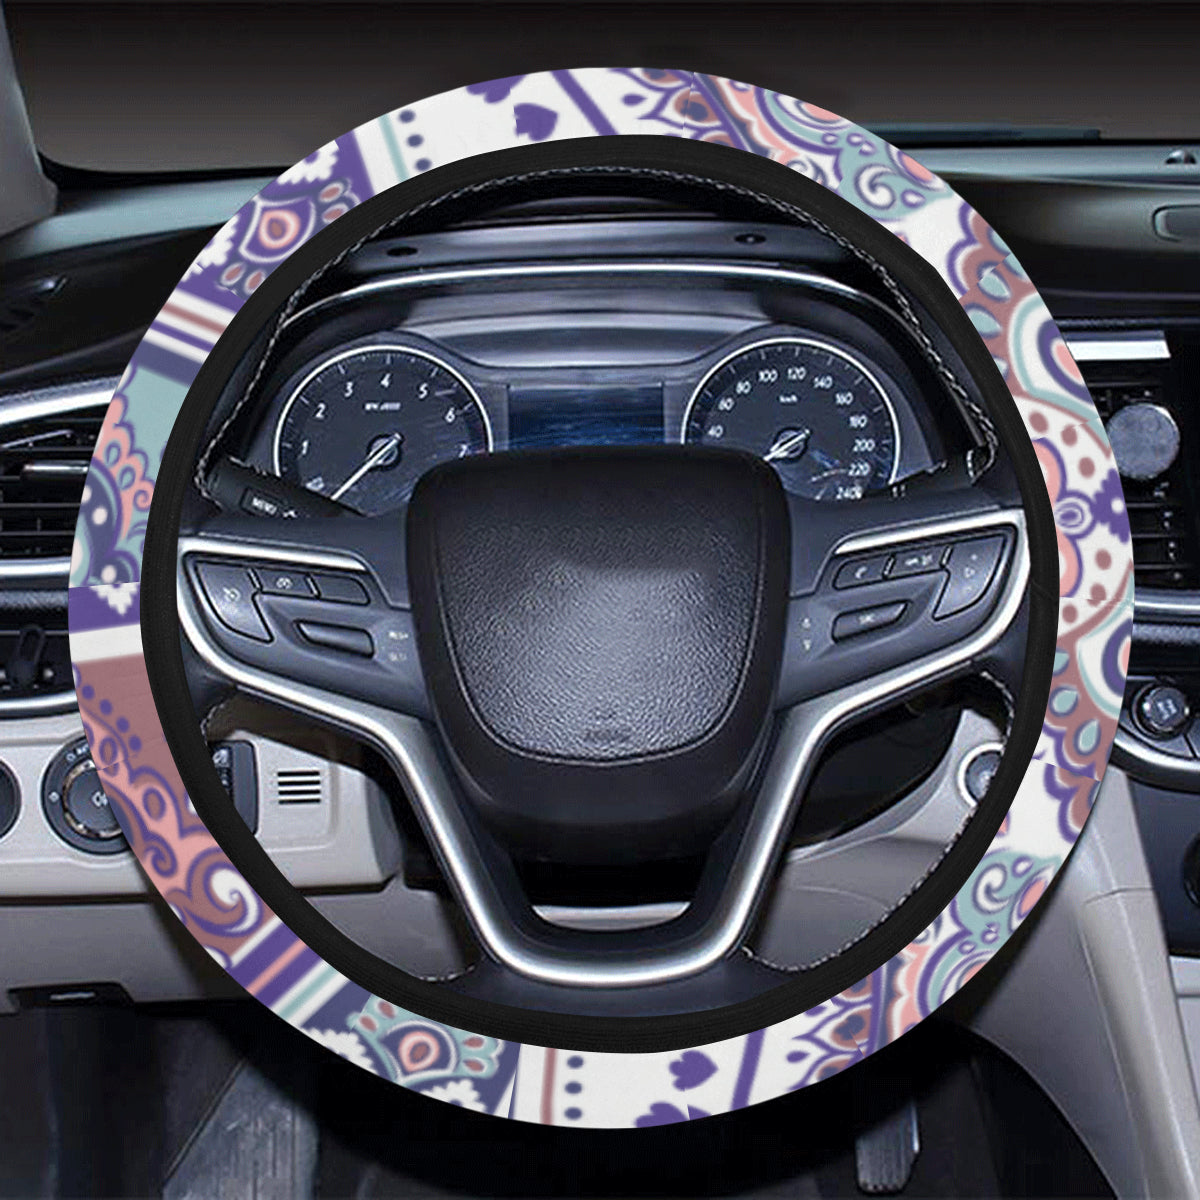 Boho Persian Steering Wheel Cover